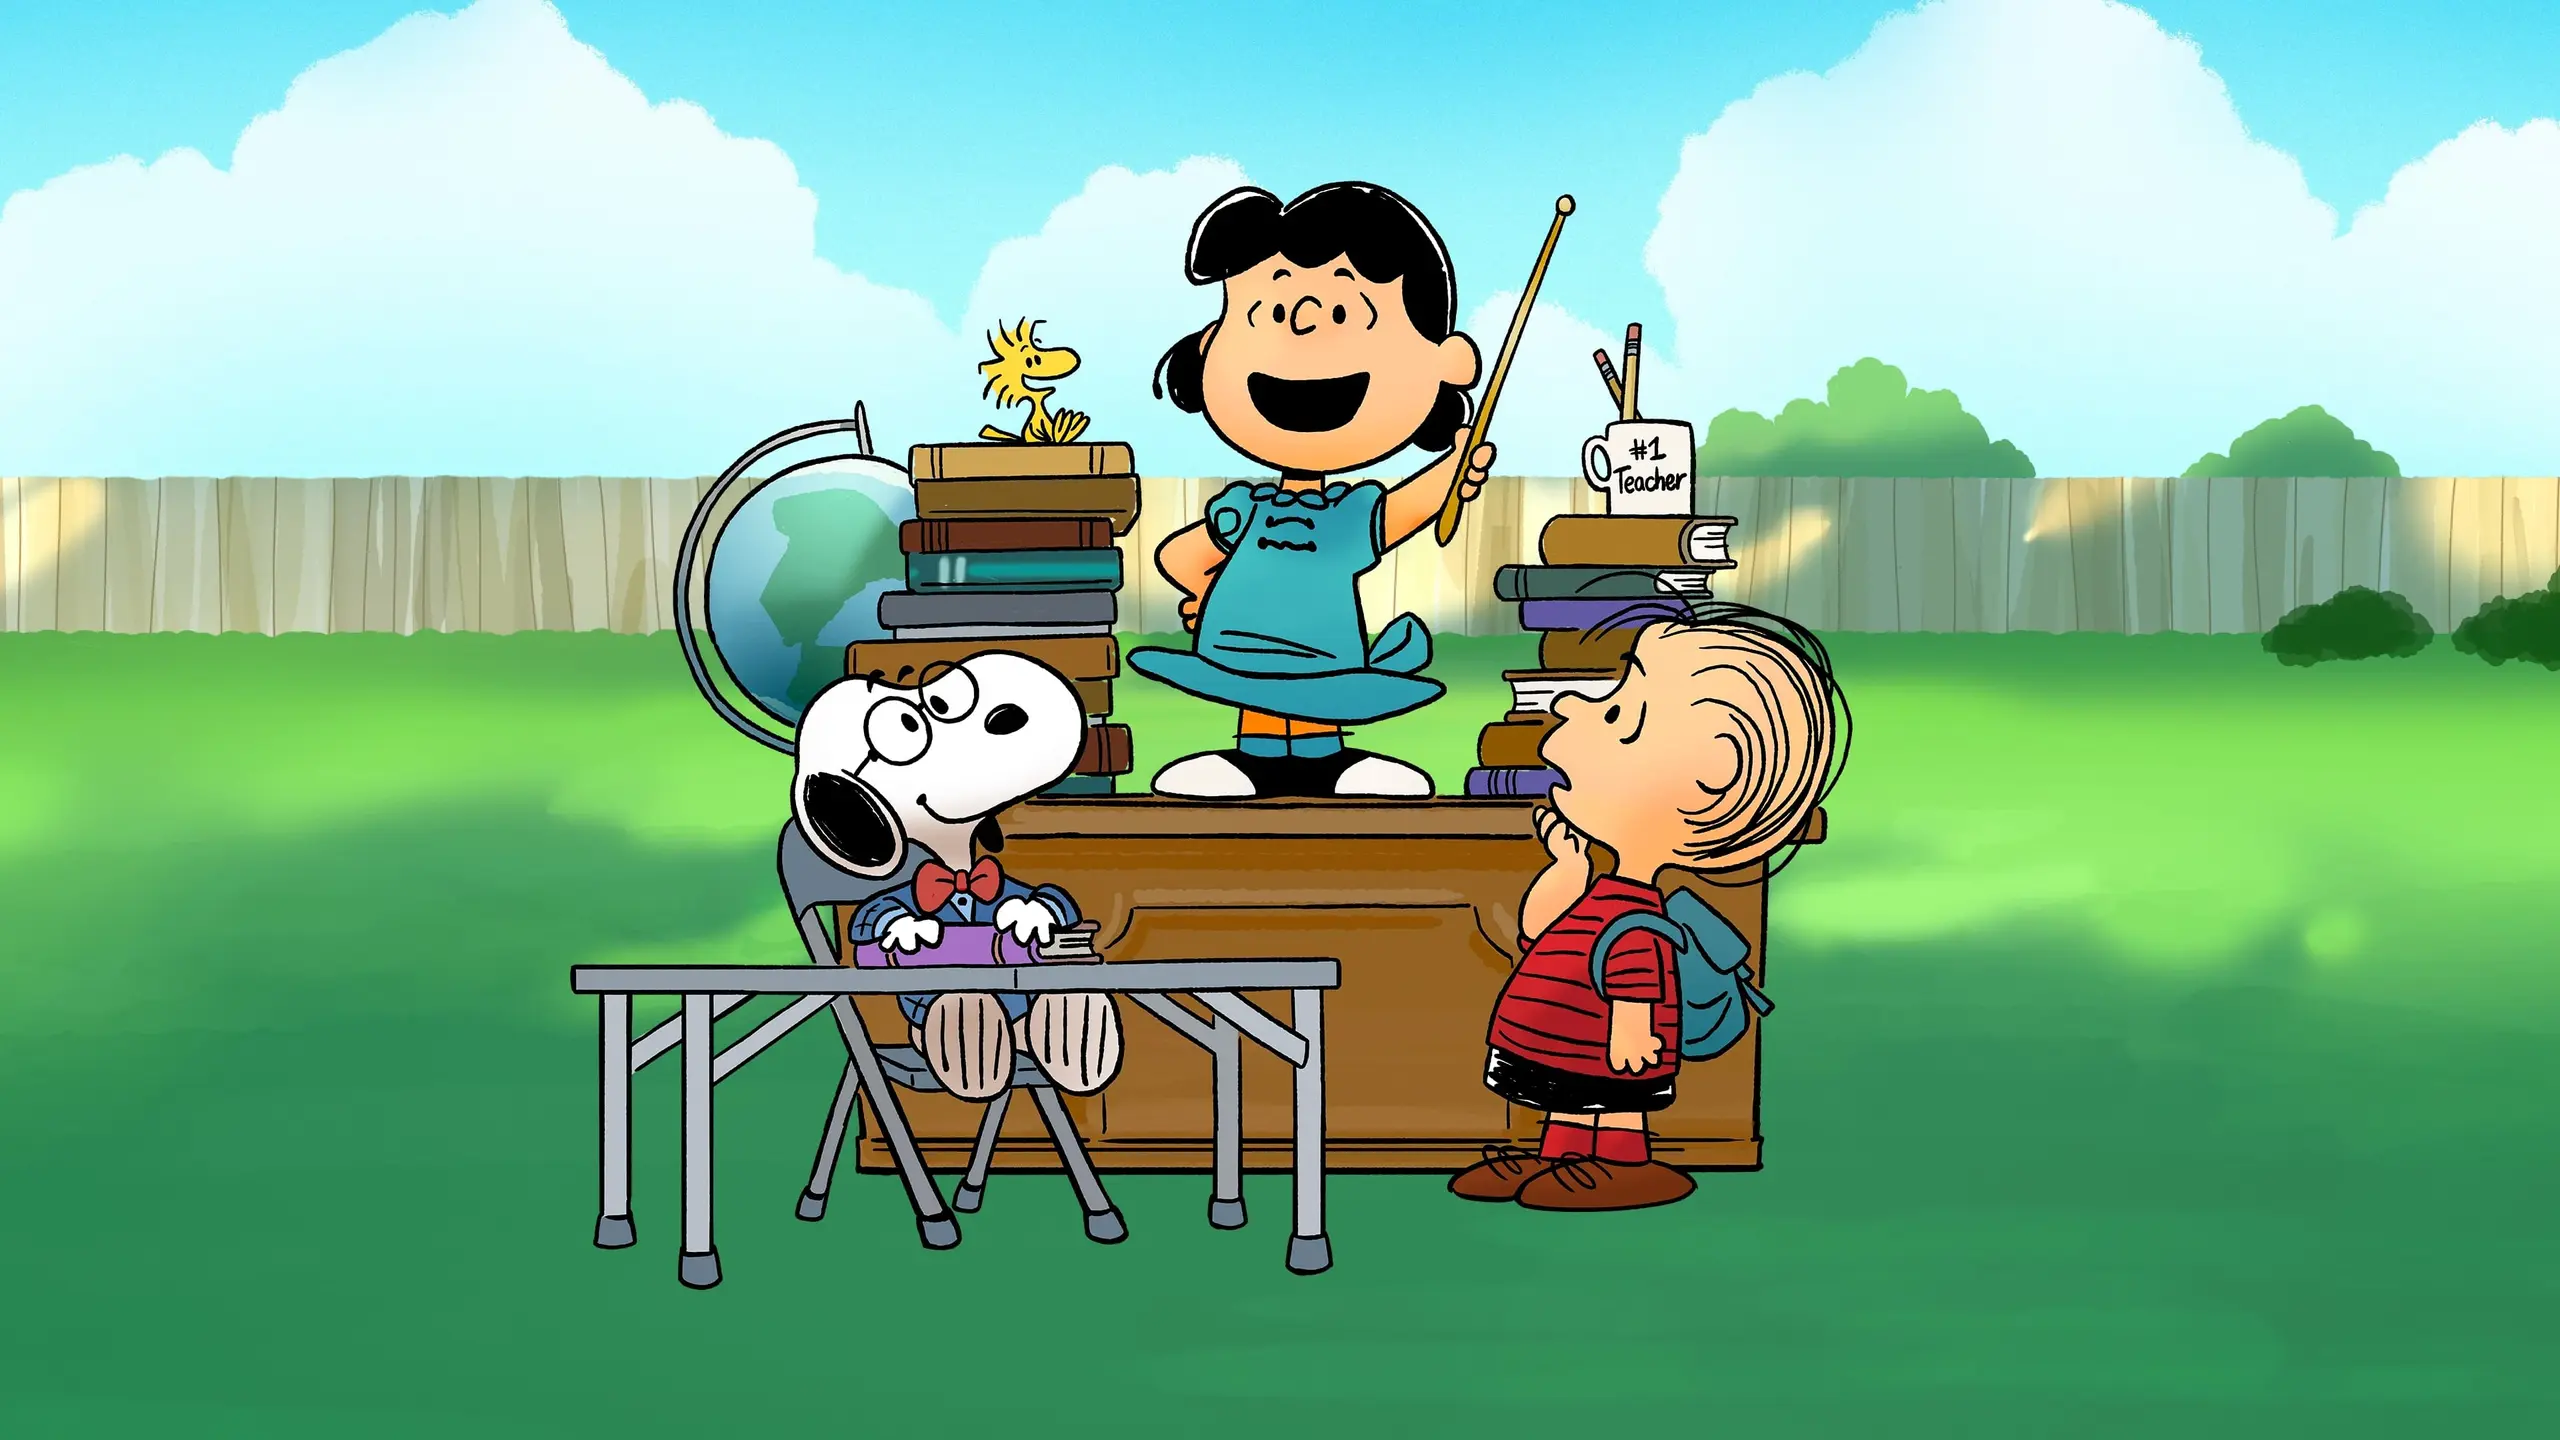 Snoopy Präsentiert: Lucys Neue Schule